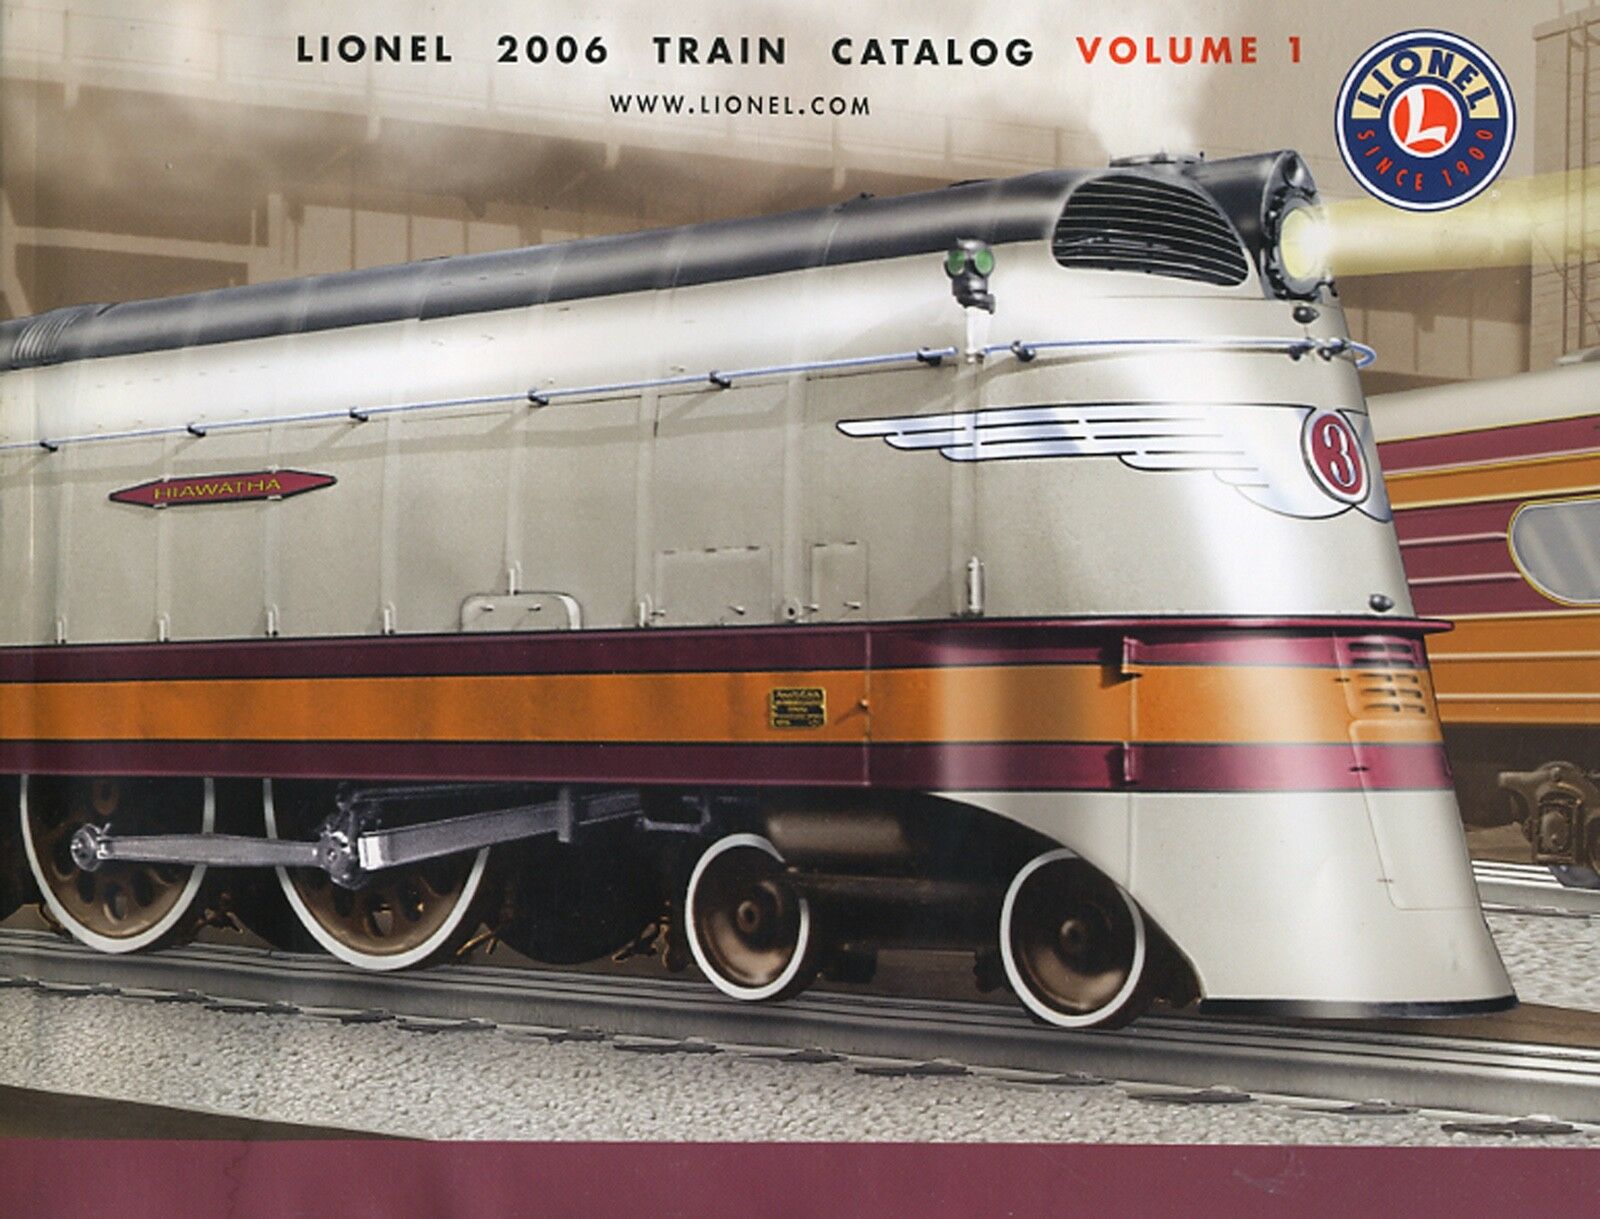 Lionel Train Catalog 2006 Free Shipping.